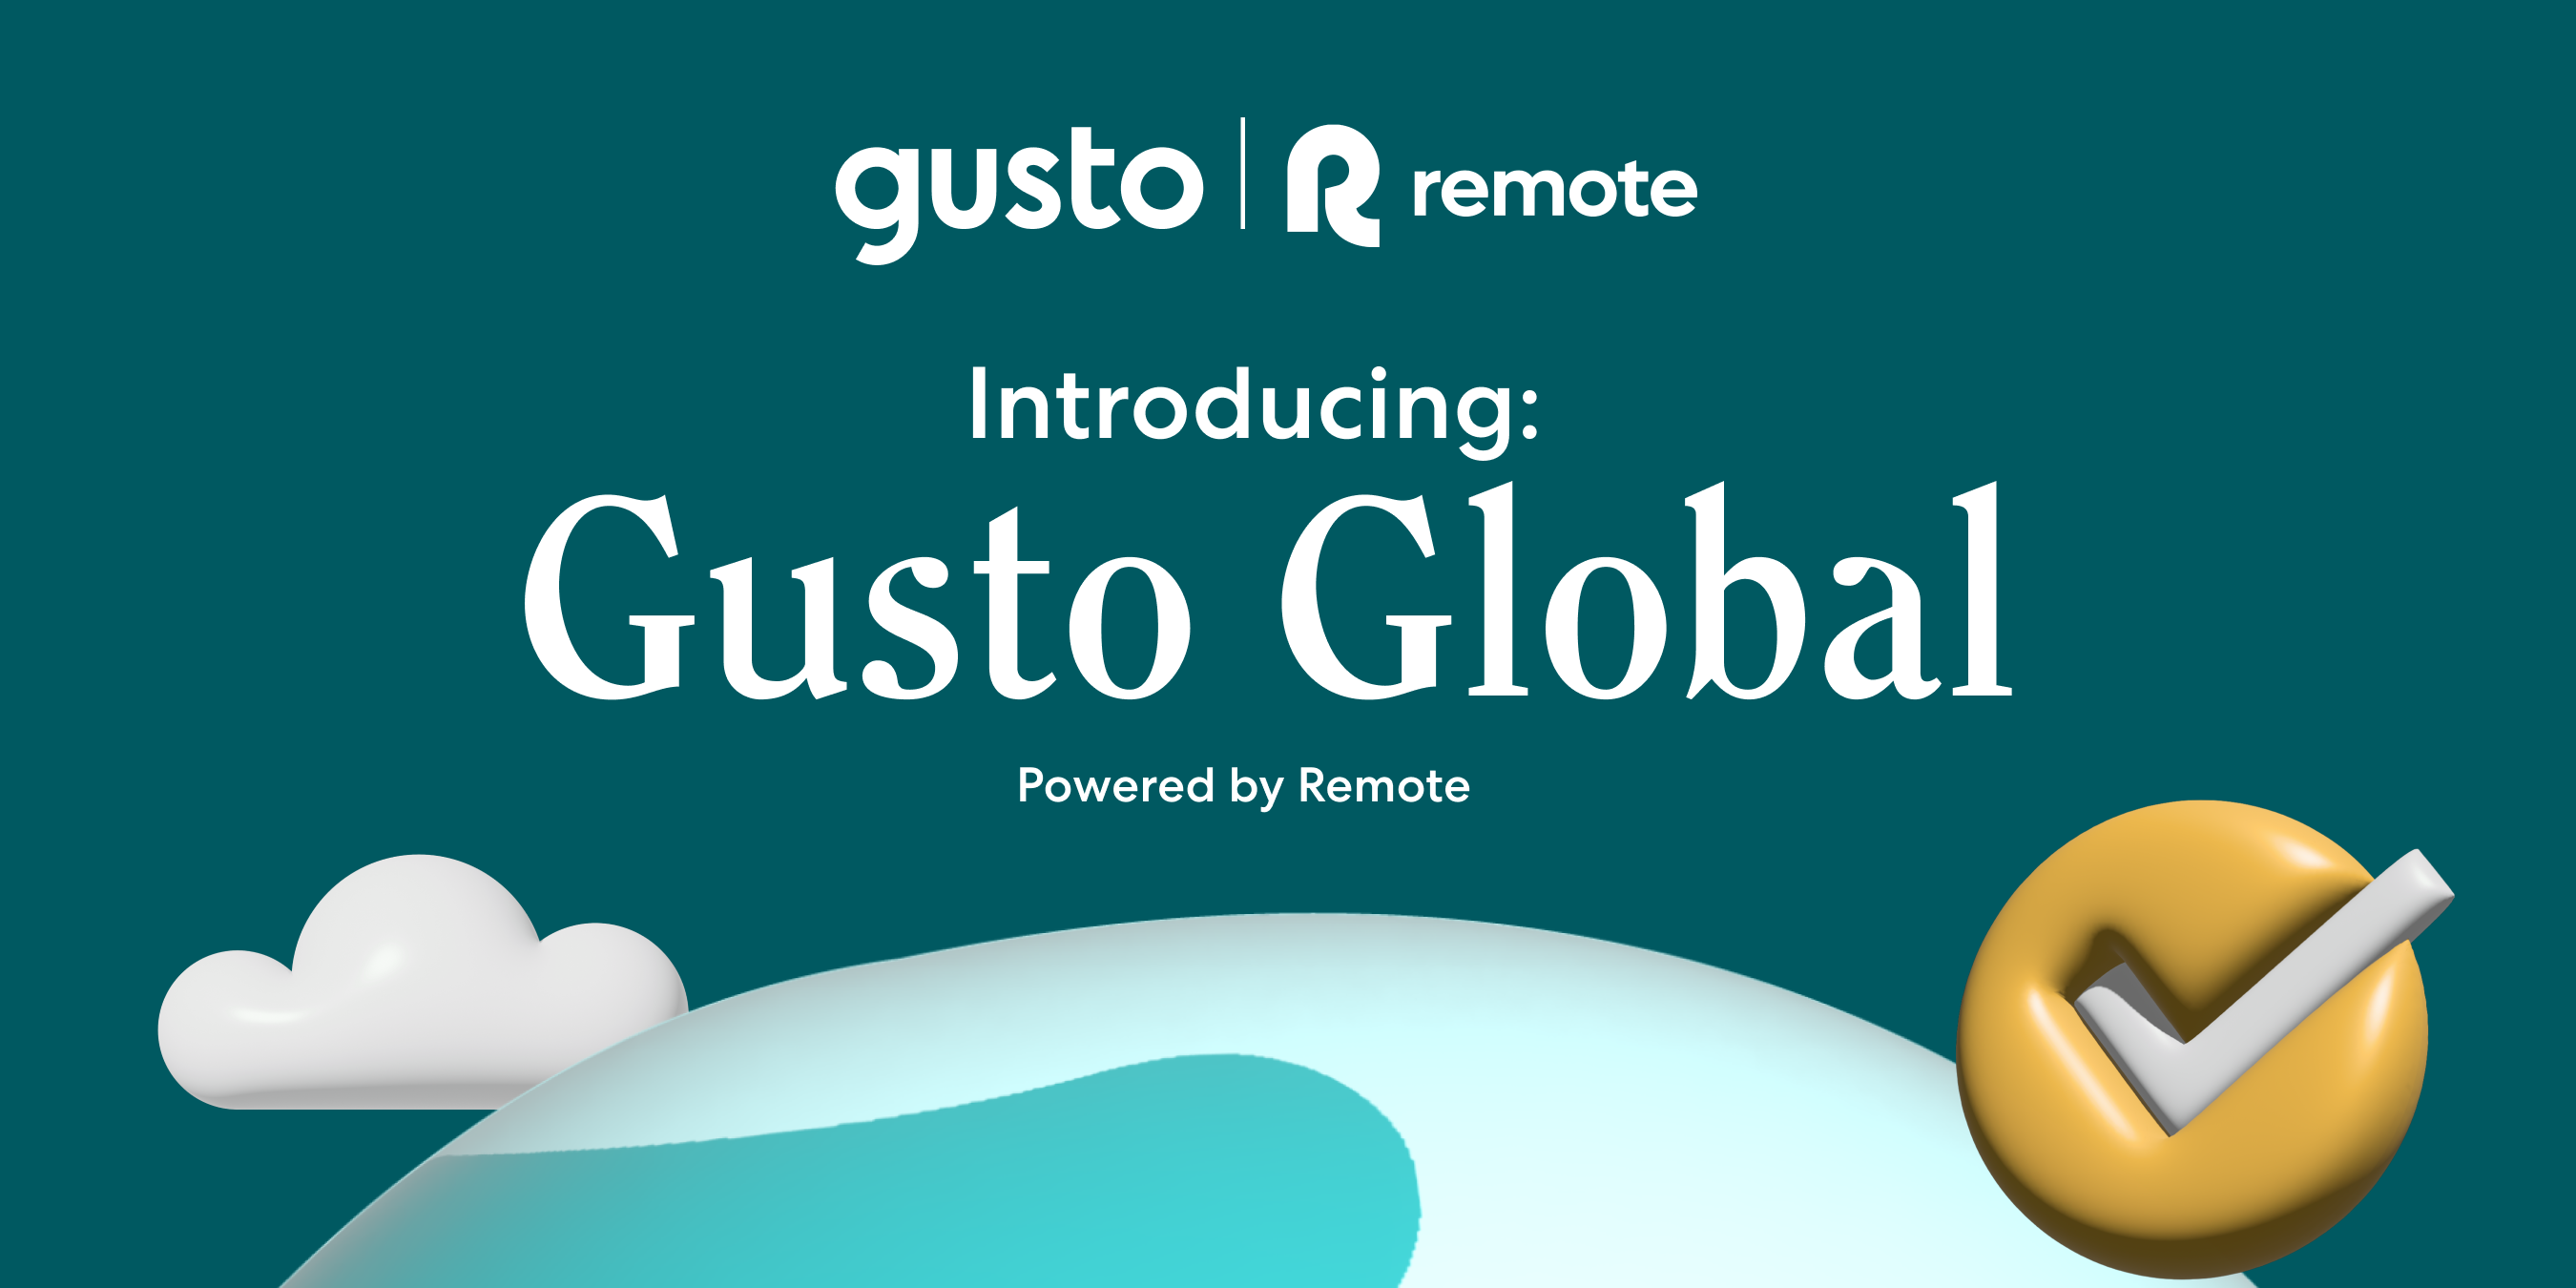 Introducing Gusto Global